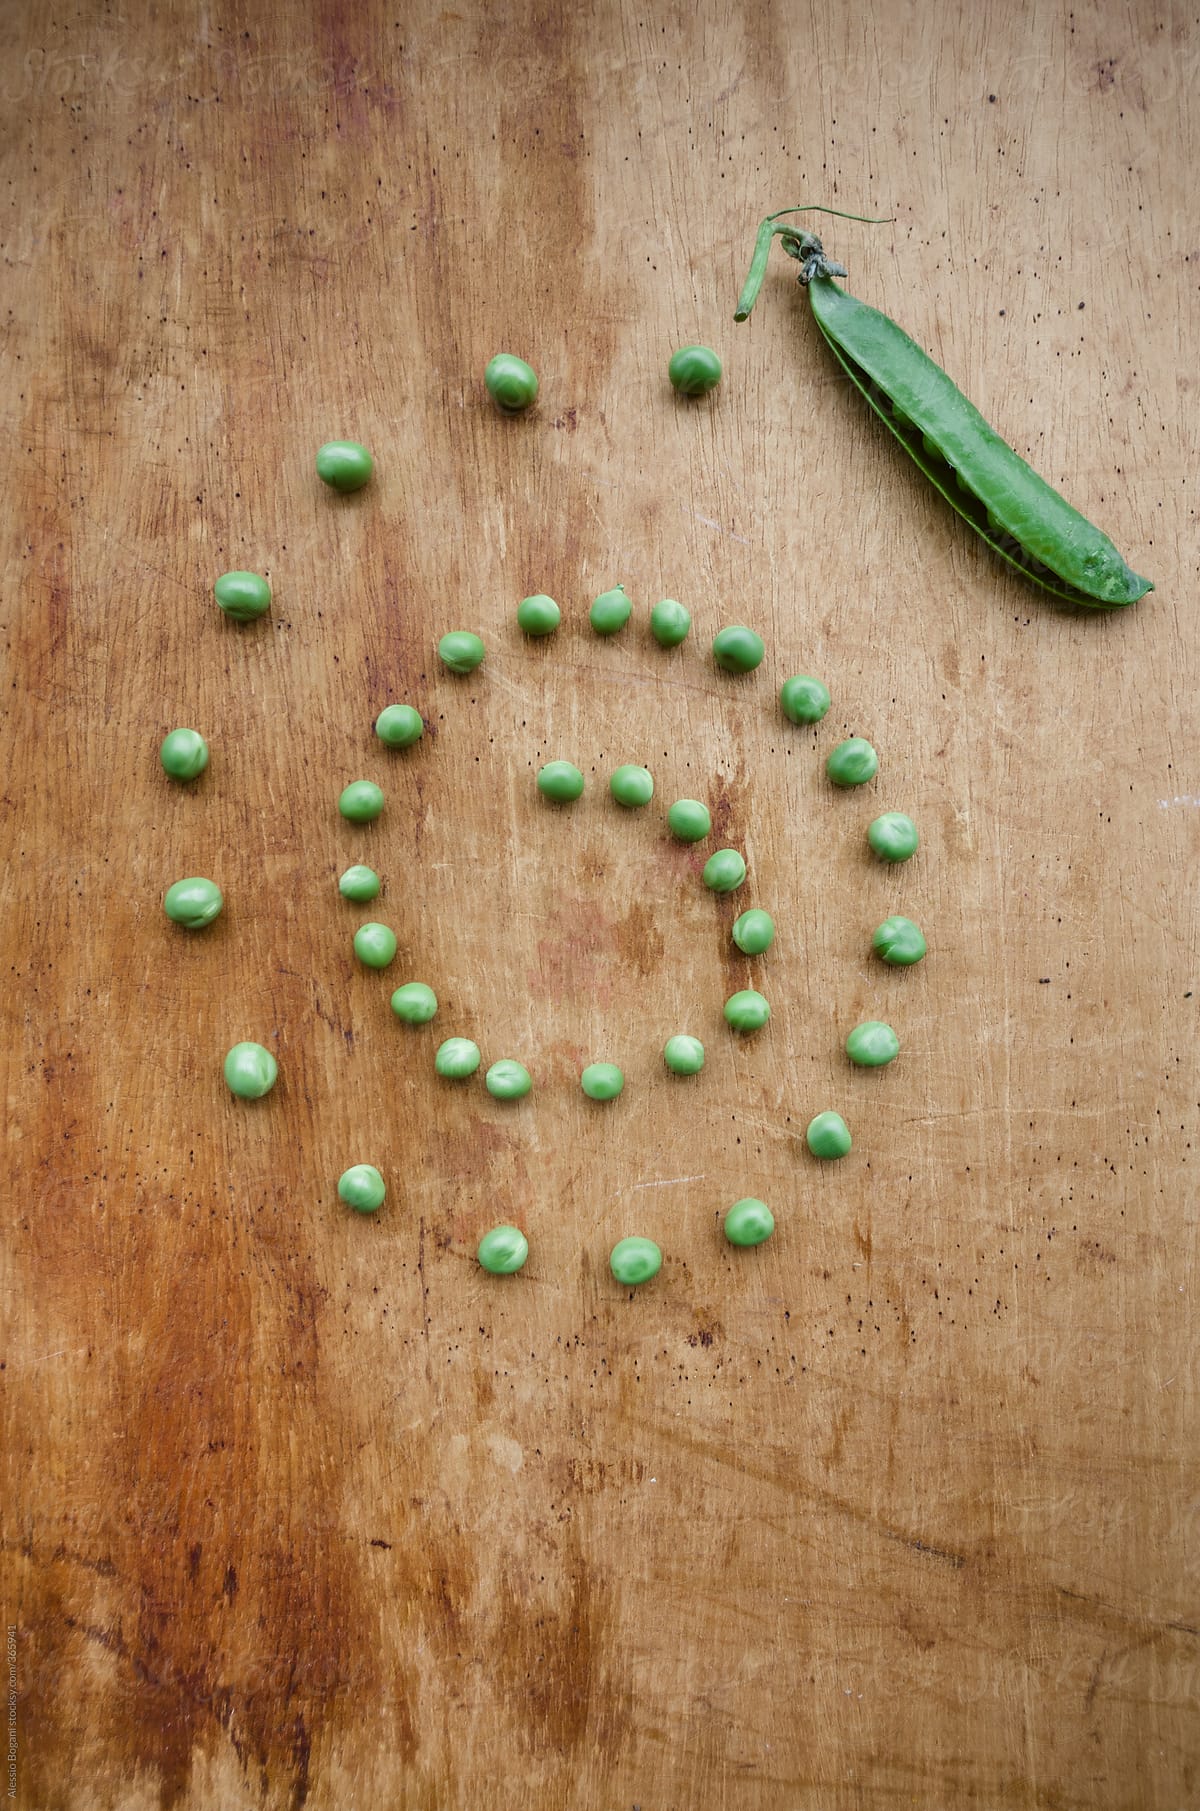 Pod and peas